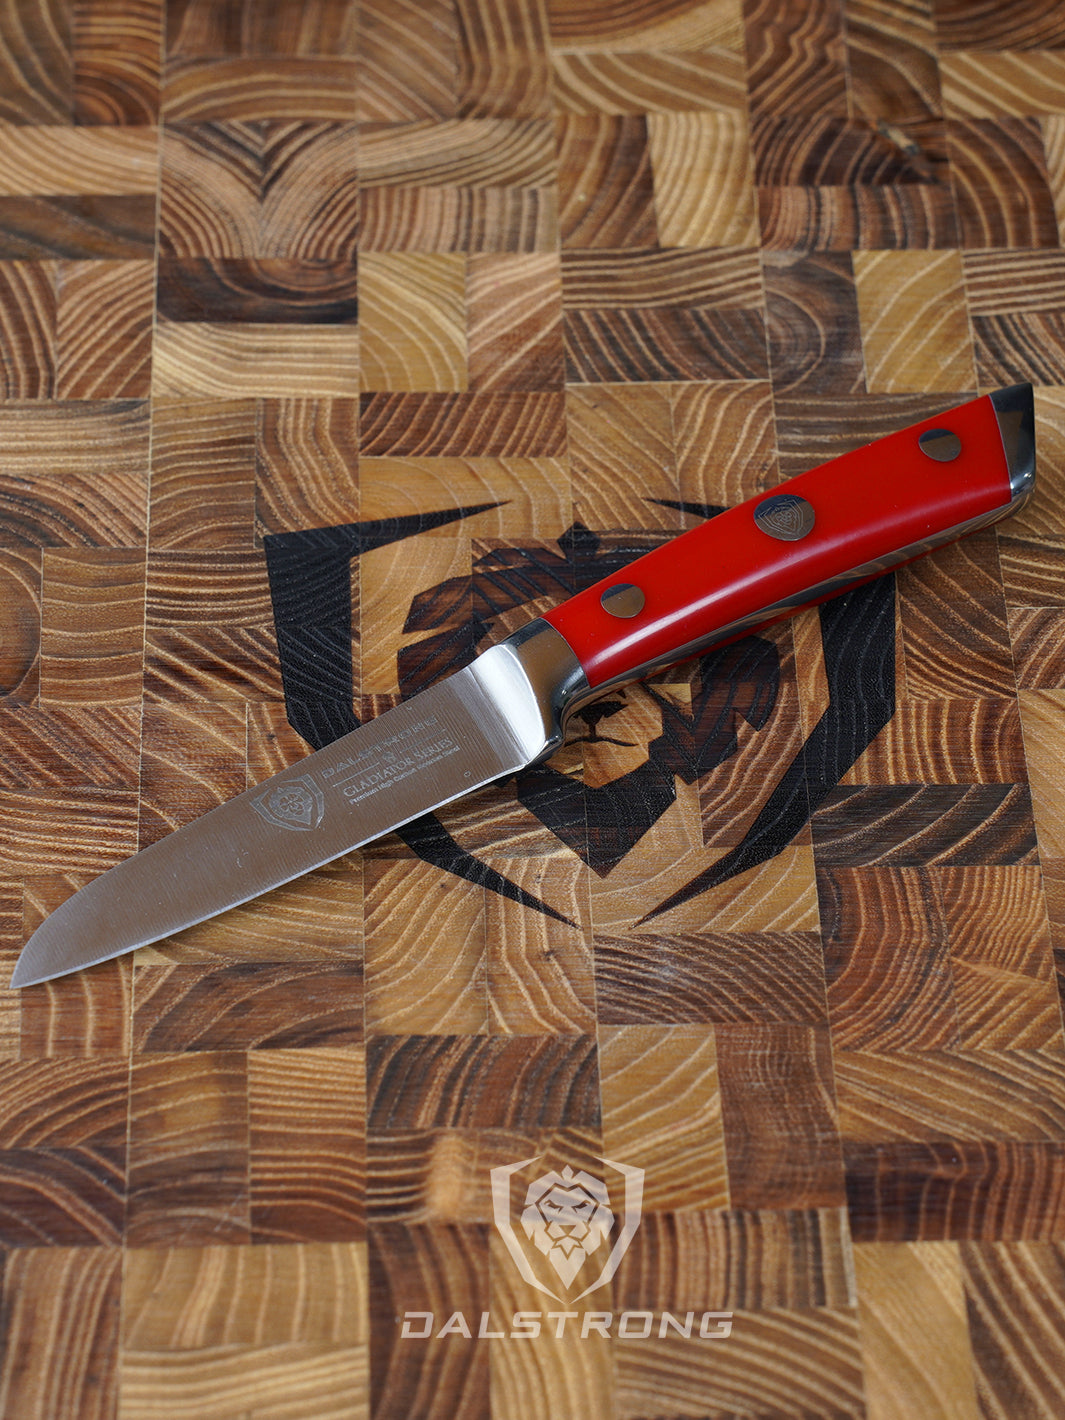 Dalstrong Santoku Knife - Small - Gladiator Series - German HC Steel - 5 - Sheath